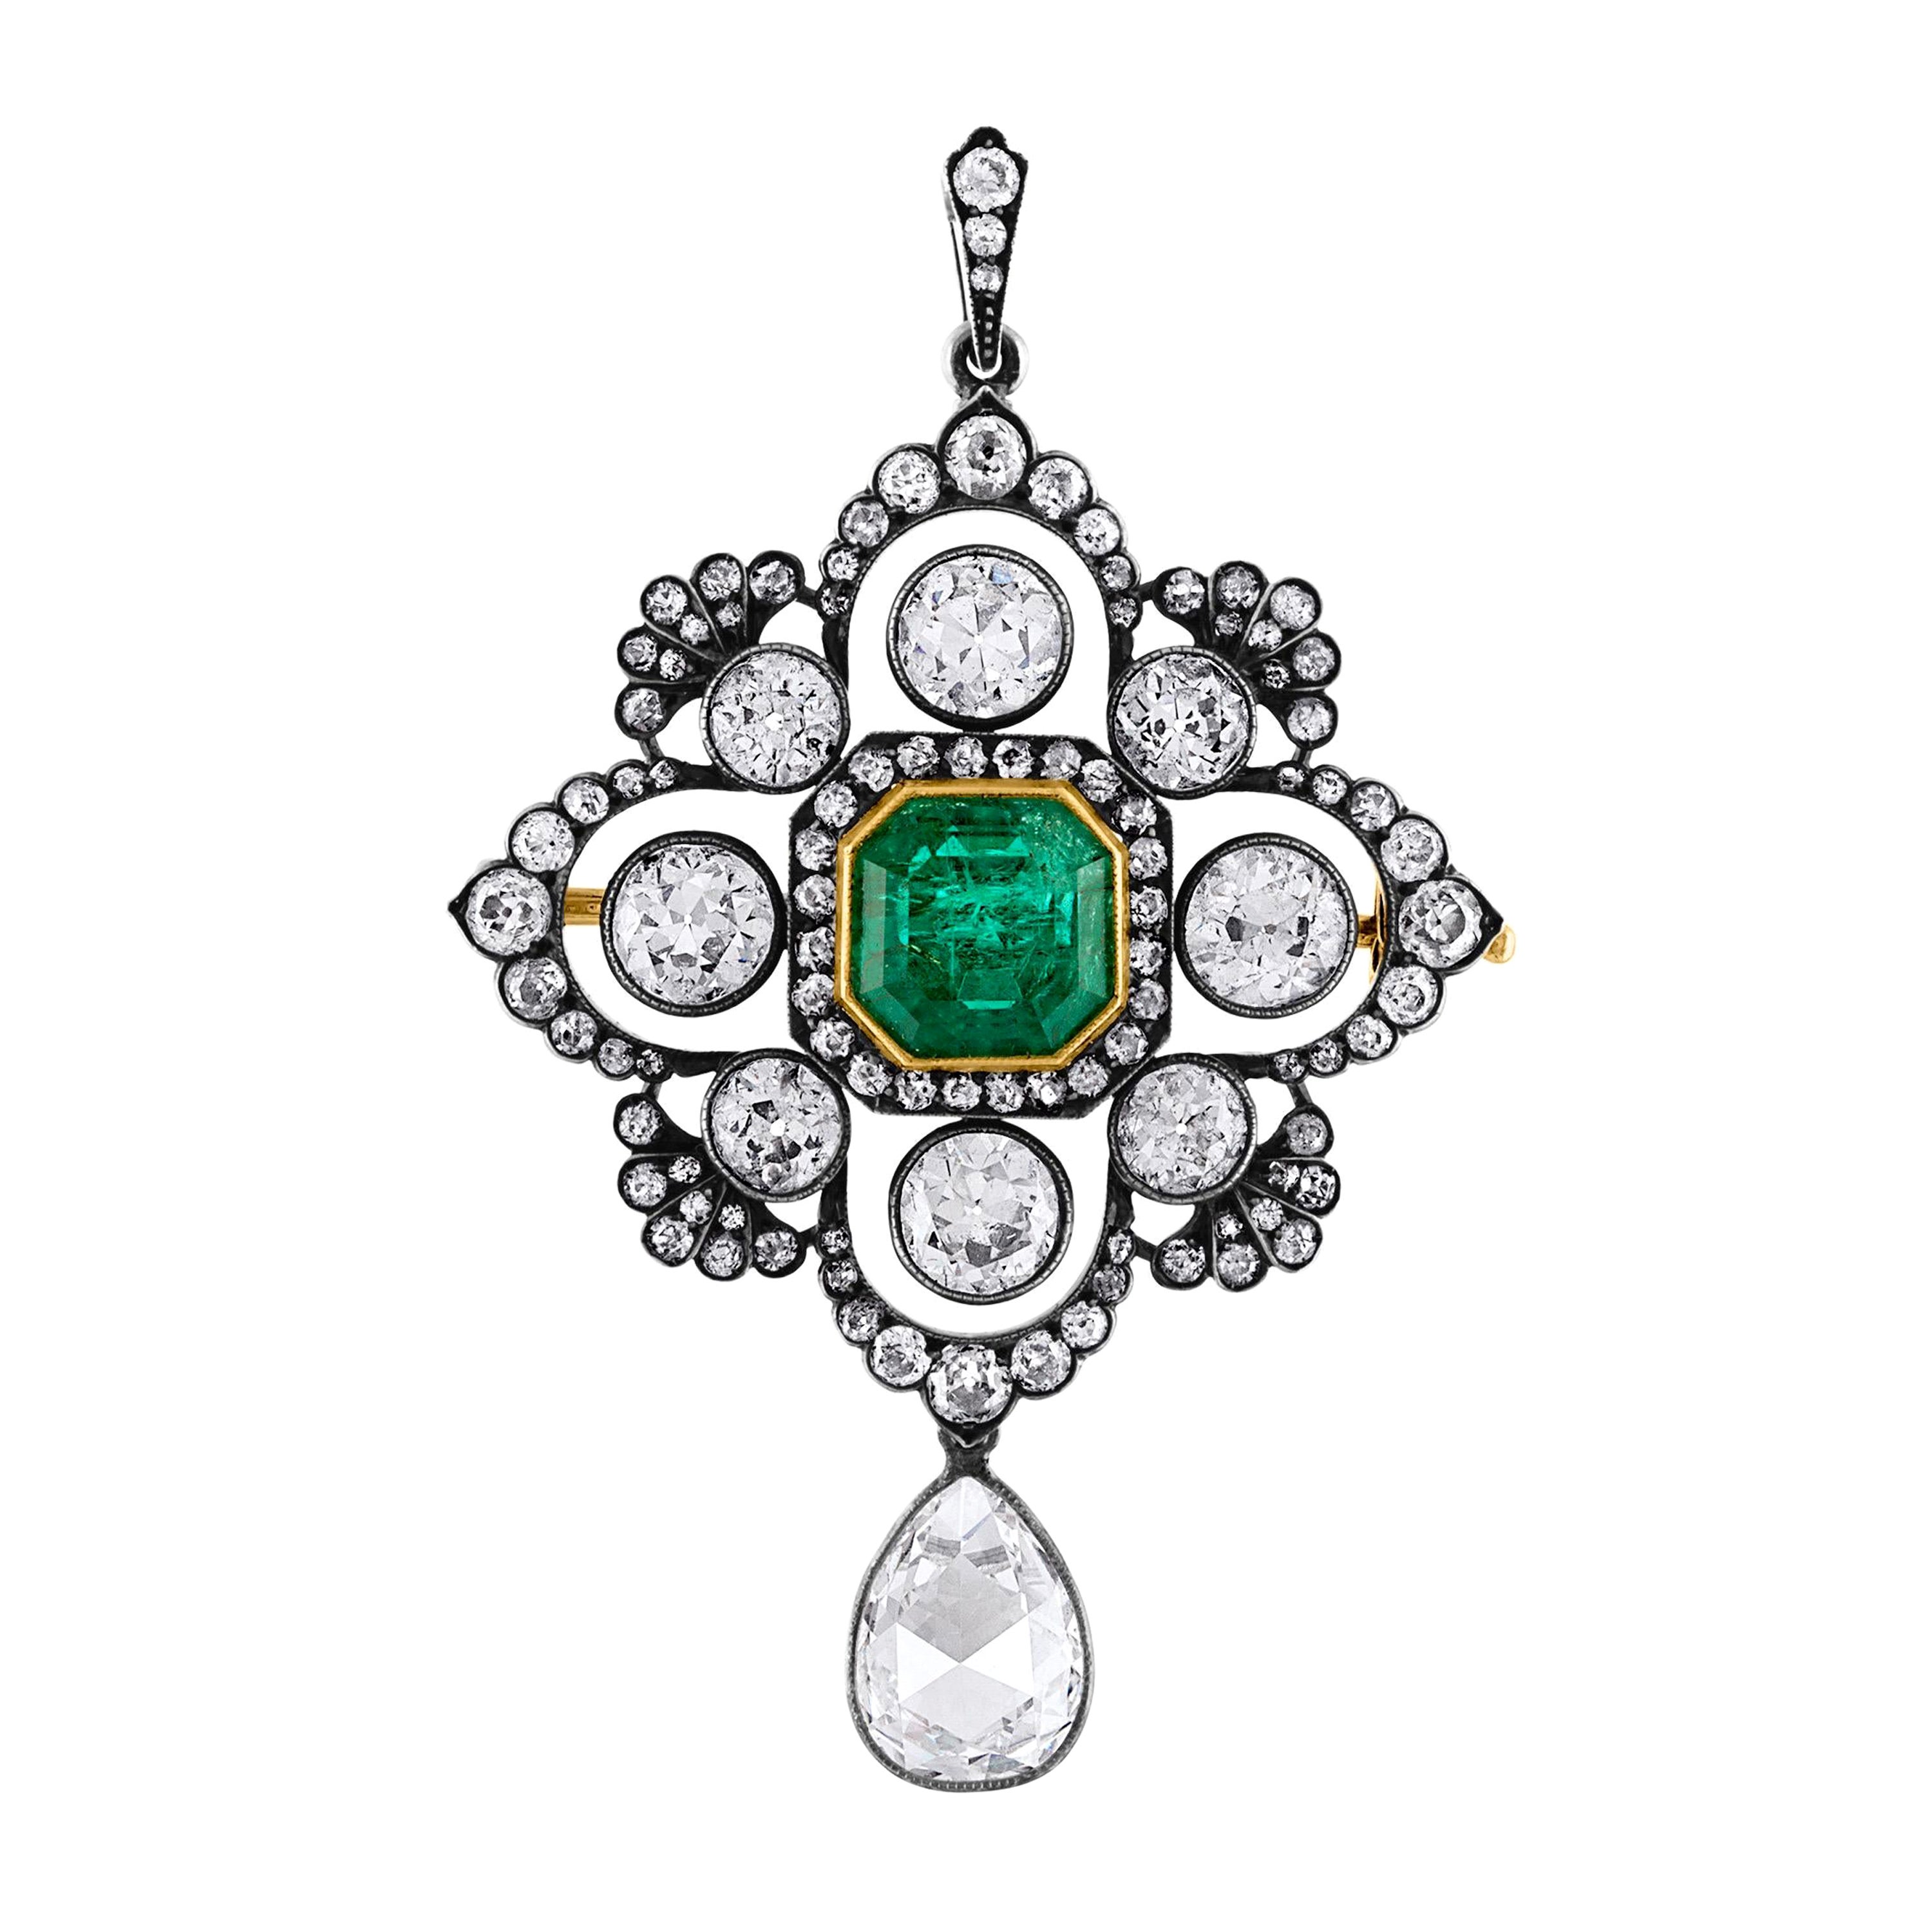  Victorian 4.26 Carat Colombian Emerald and 8.49 Carat Diamond Pendant Brooch For Sale